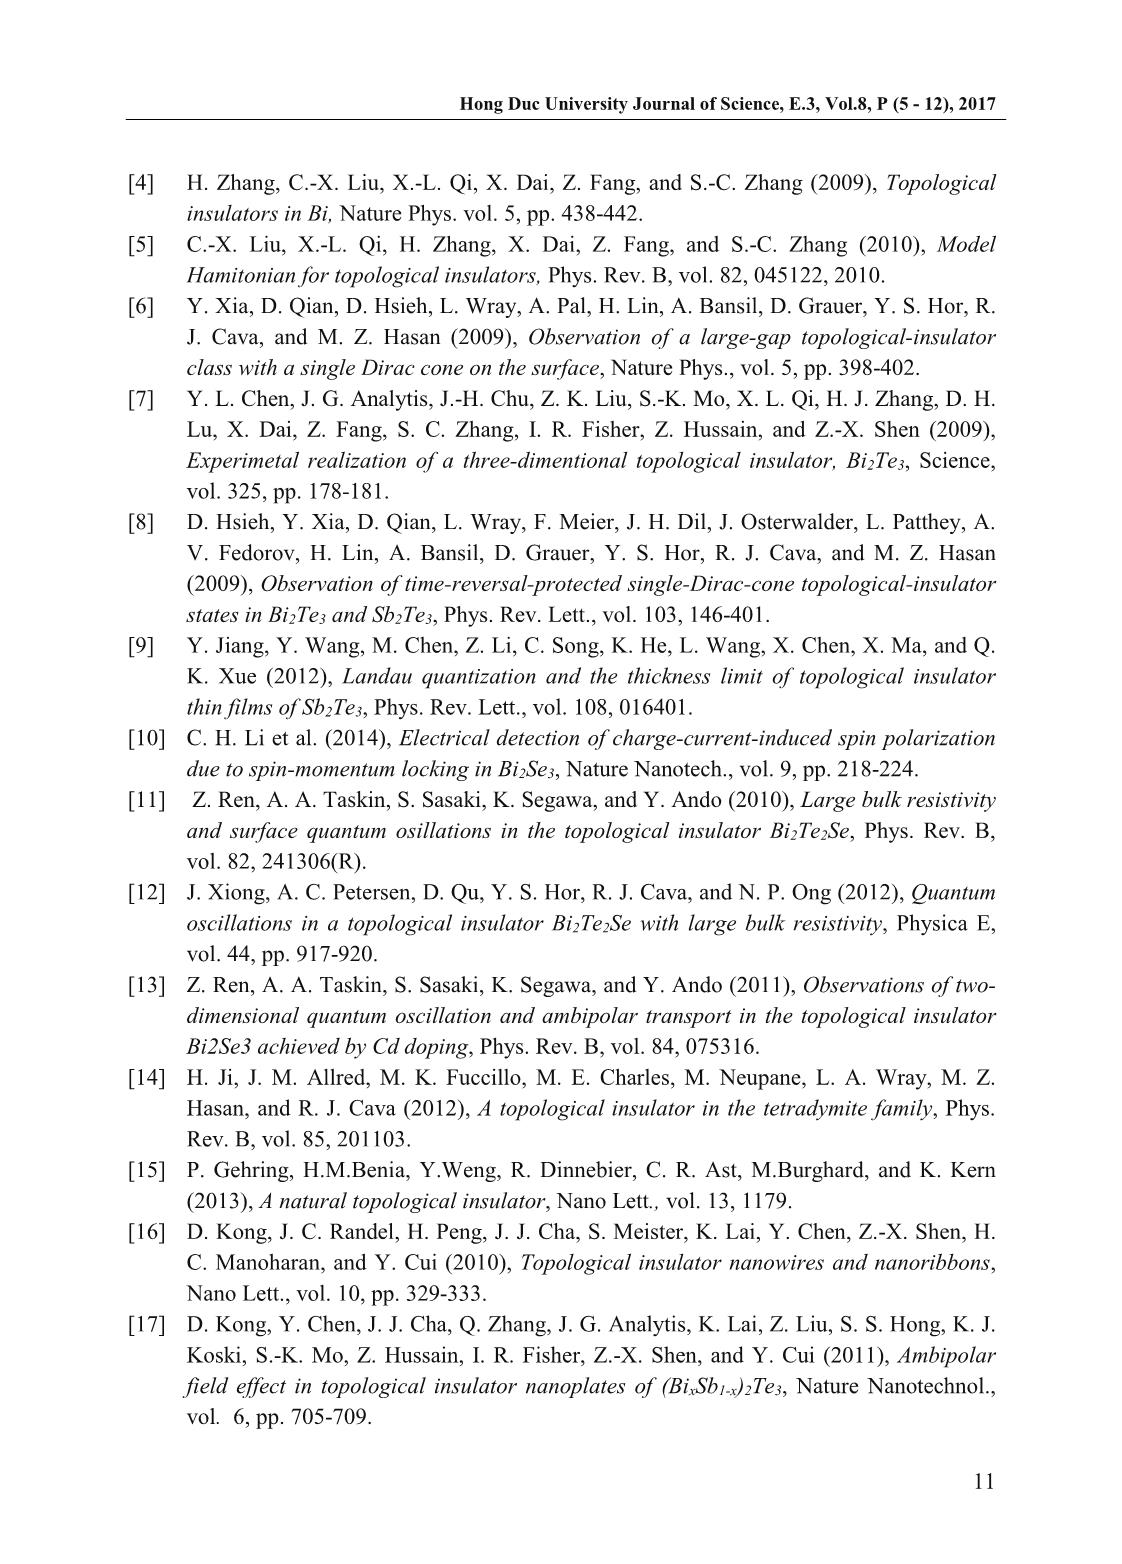 Preliminary study on gete - sbte and sm - b topological insulators trang 7